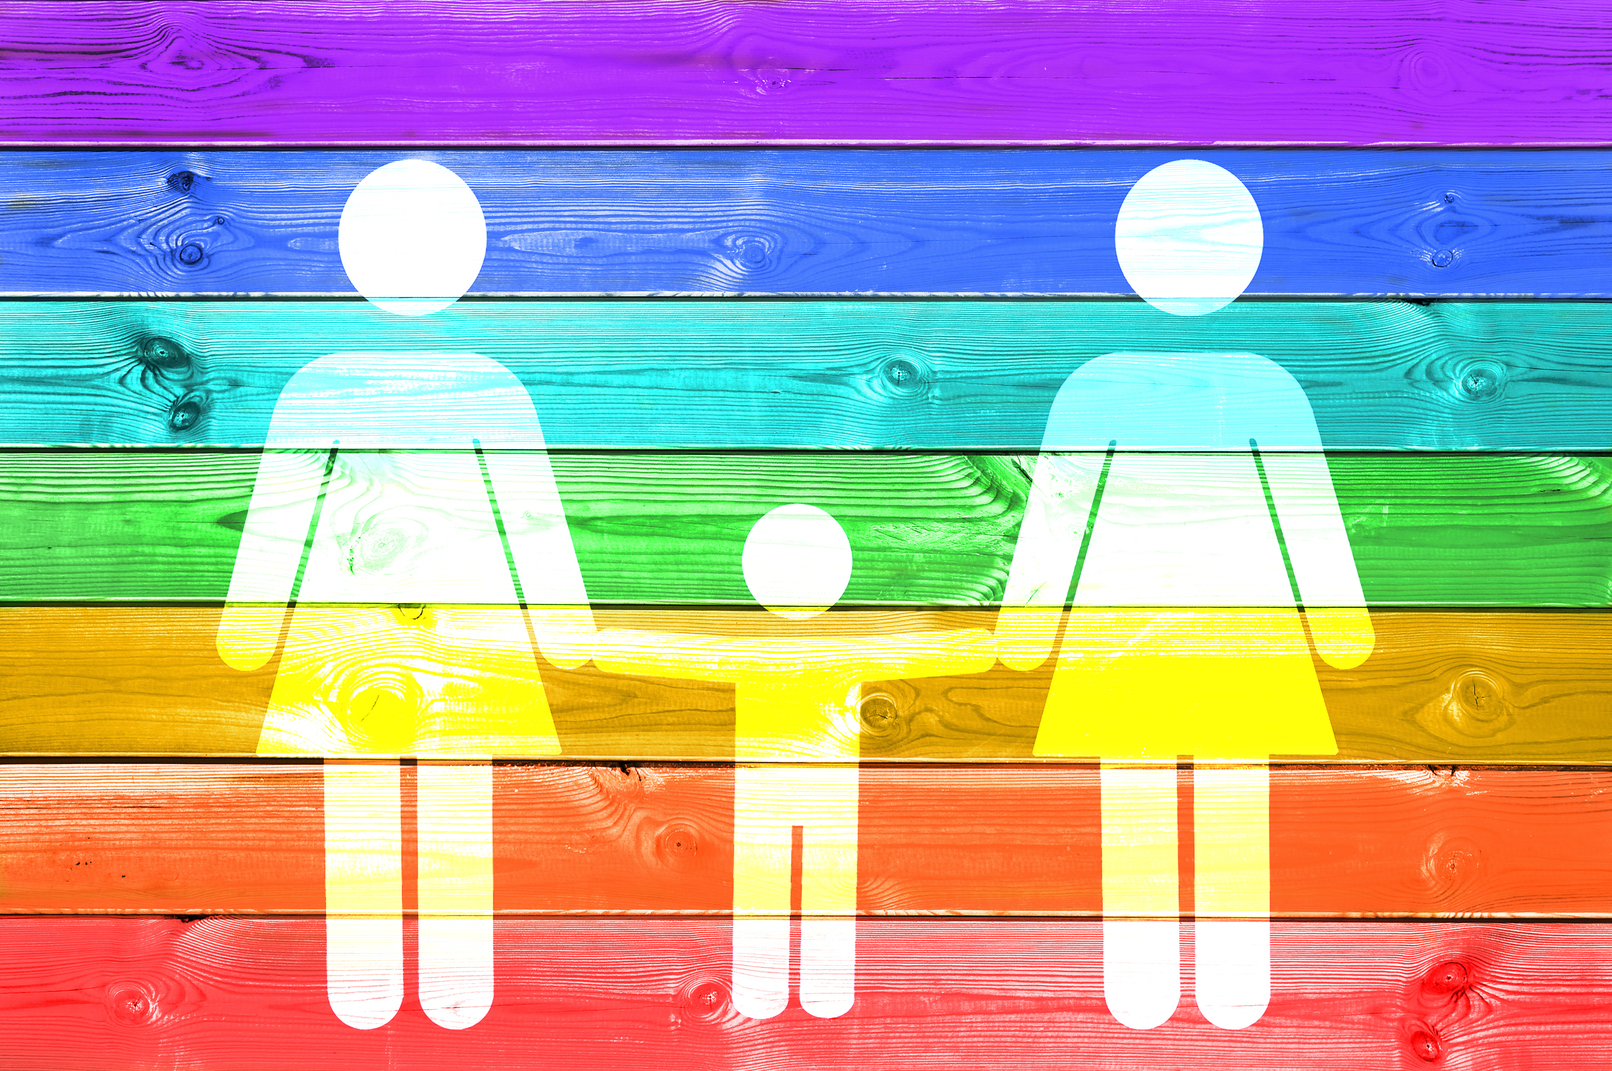 Federal Judge Rules Philadelphia Adoption Agencies Cannot Discriminate Against Same-Sex Parents